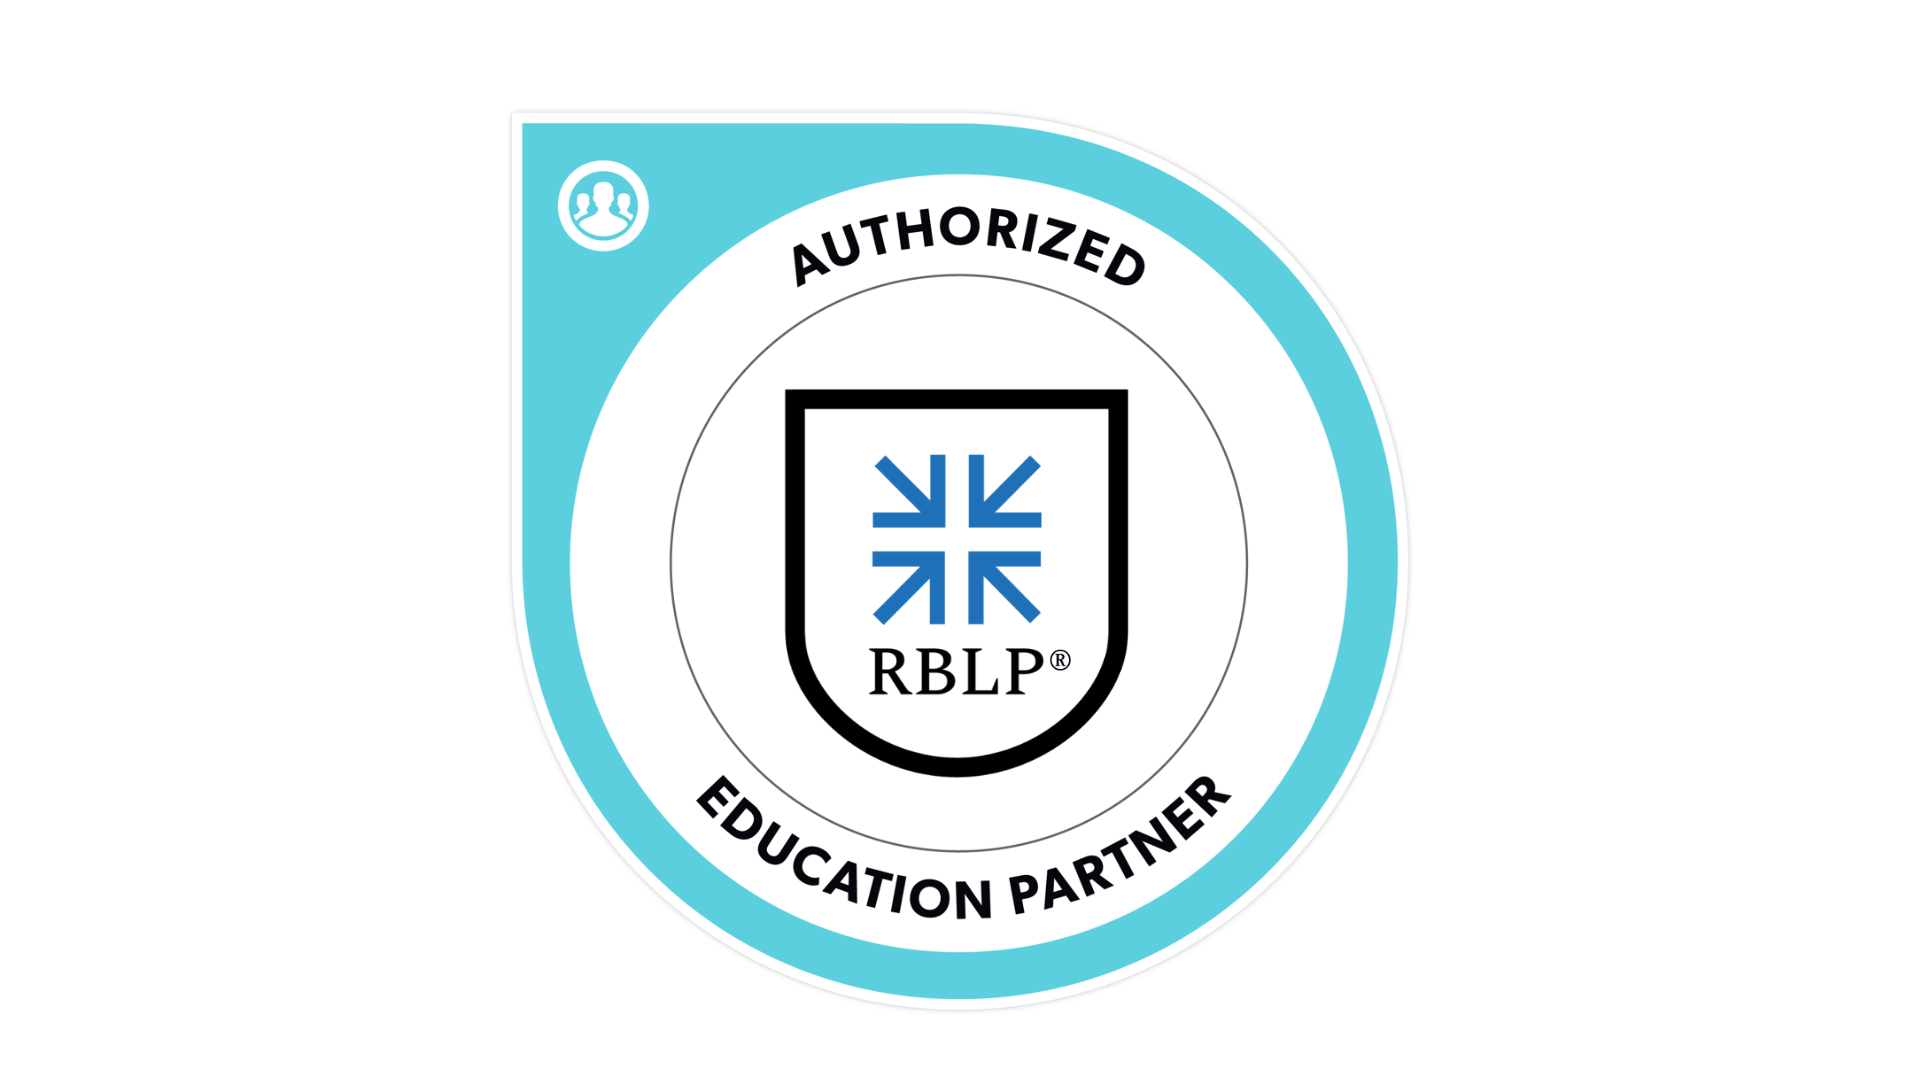 RBLP Authorized Education Partner logo